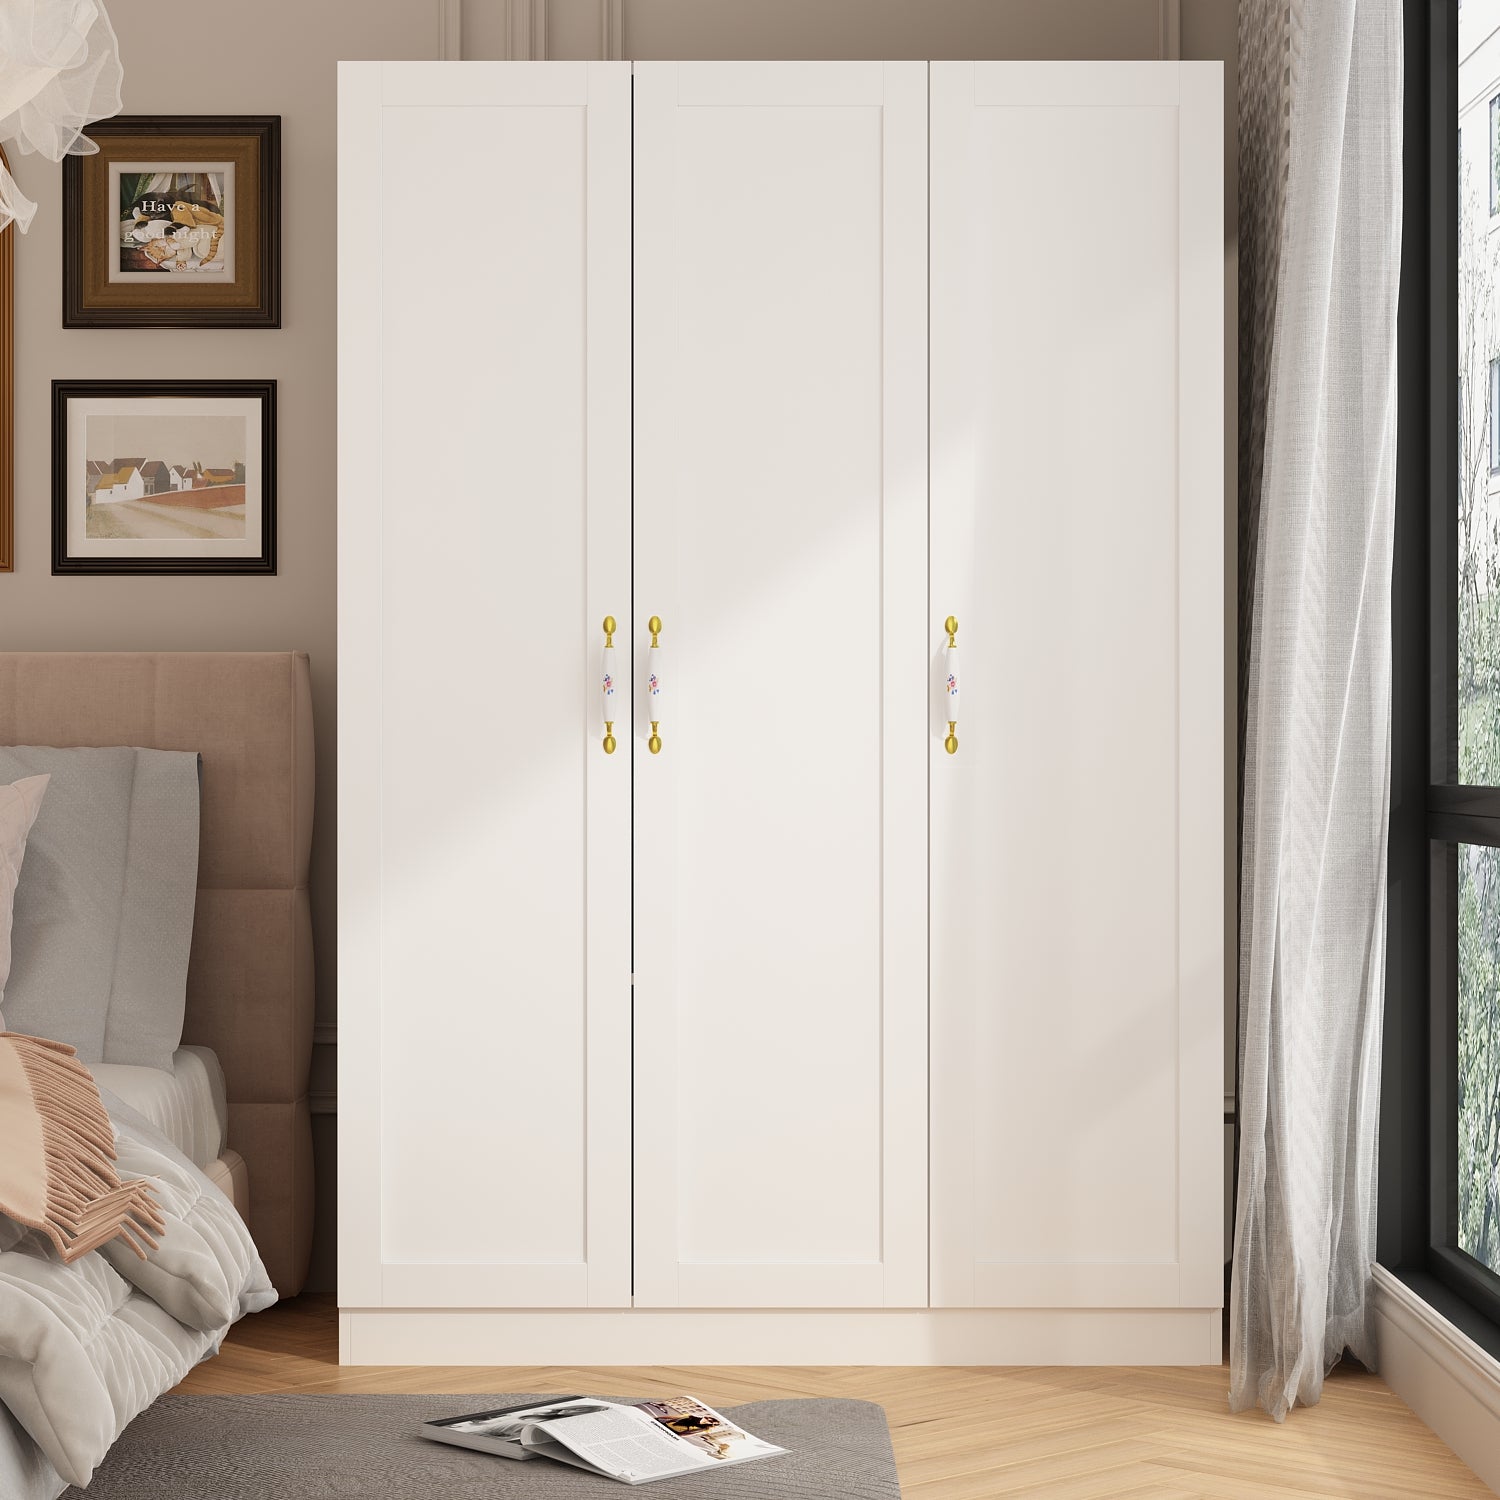 Large Wardrobe Closet Storage 3-Door Cabinet with Hanging Rod Ceramic Handle